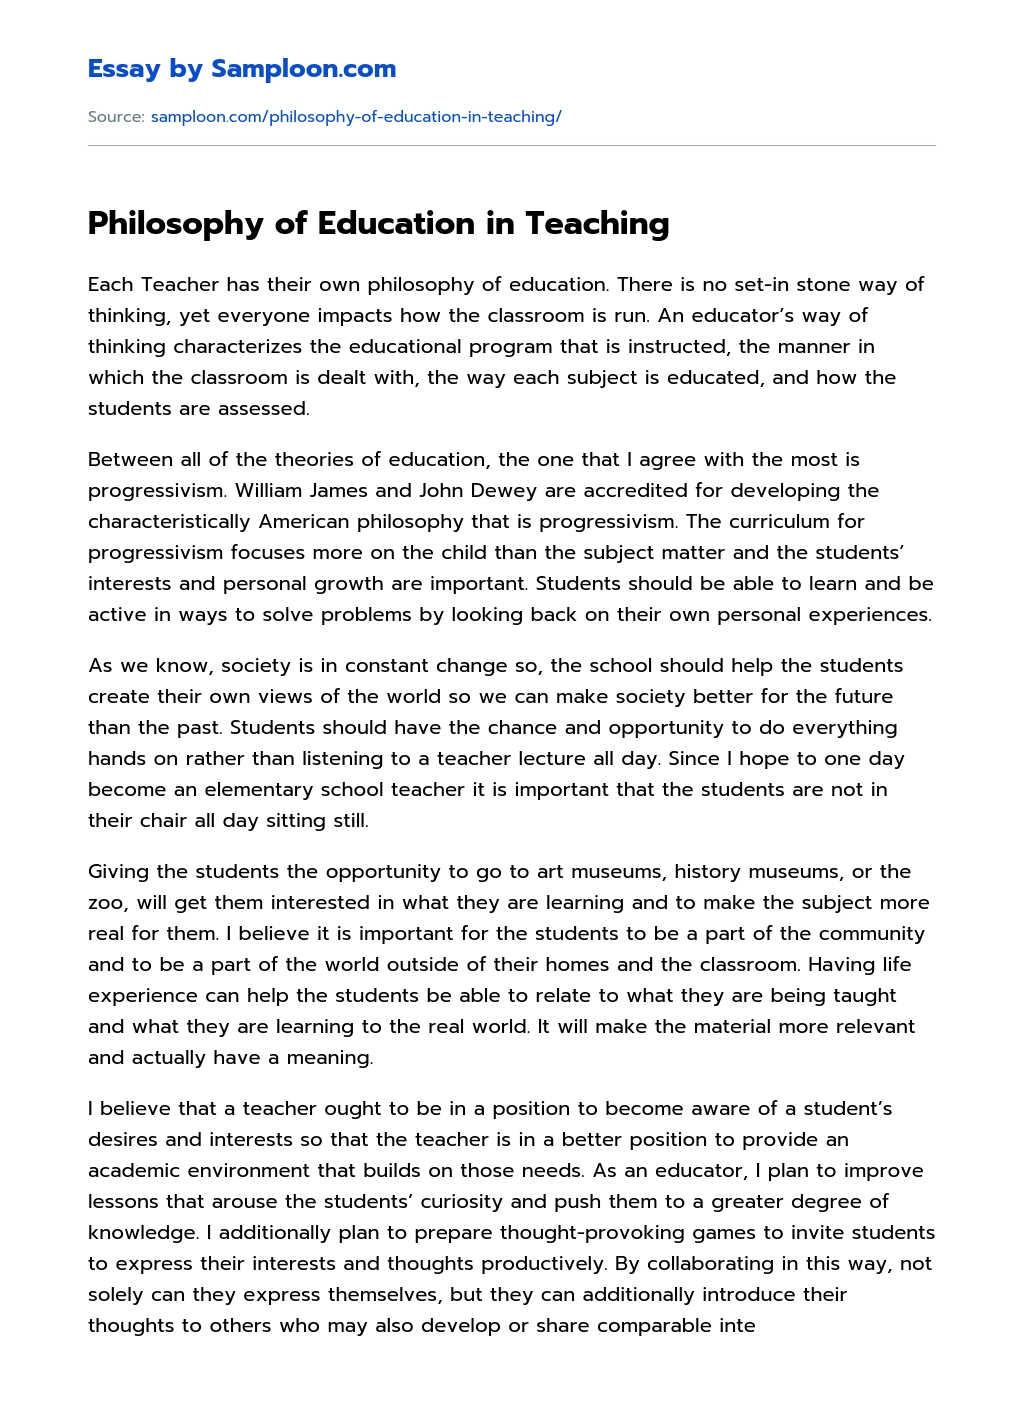 Philosophy of Education in Teaching essay